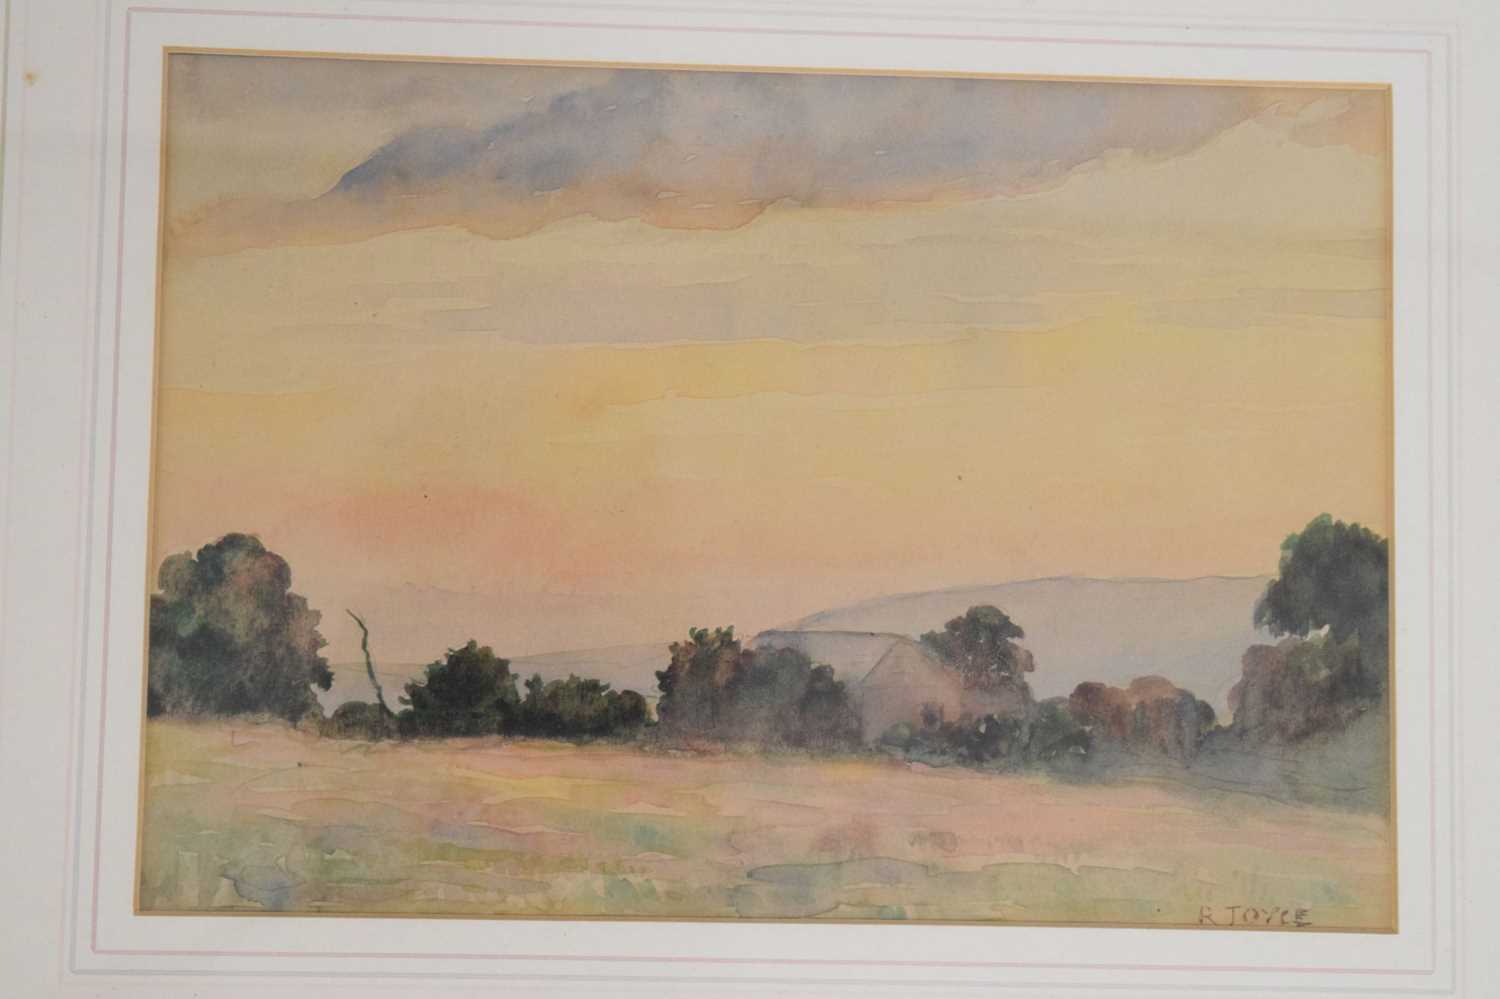 Richard Joyce (1873-1931) - Six watercolours - North Wales landscapes - Image 5 of 9